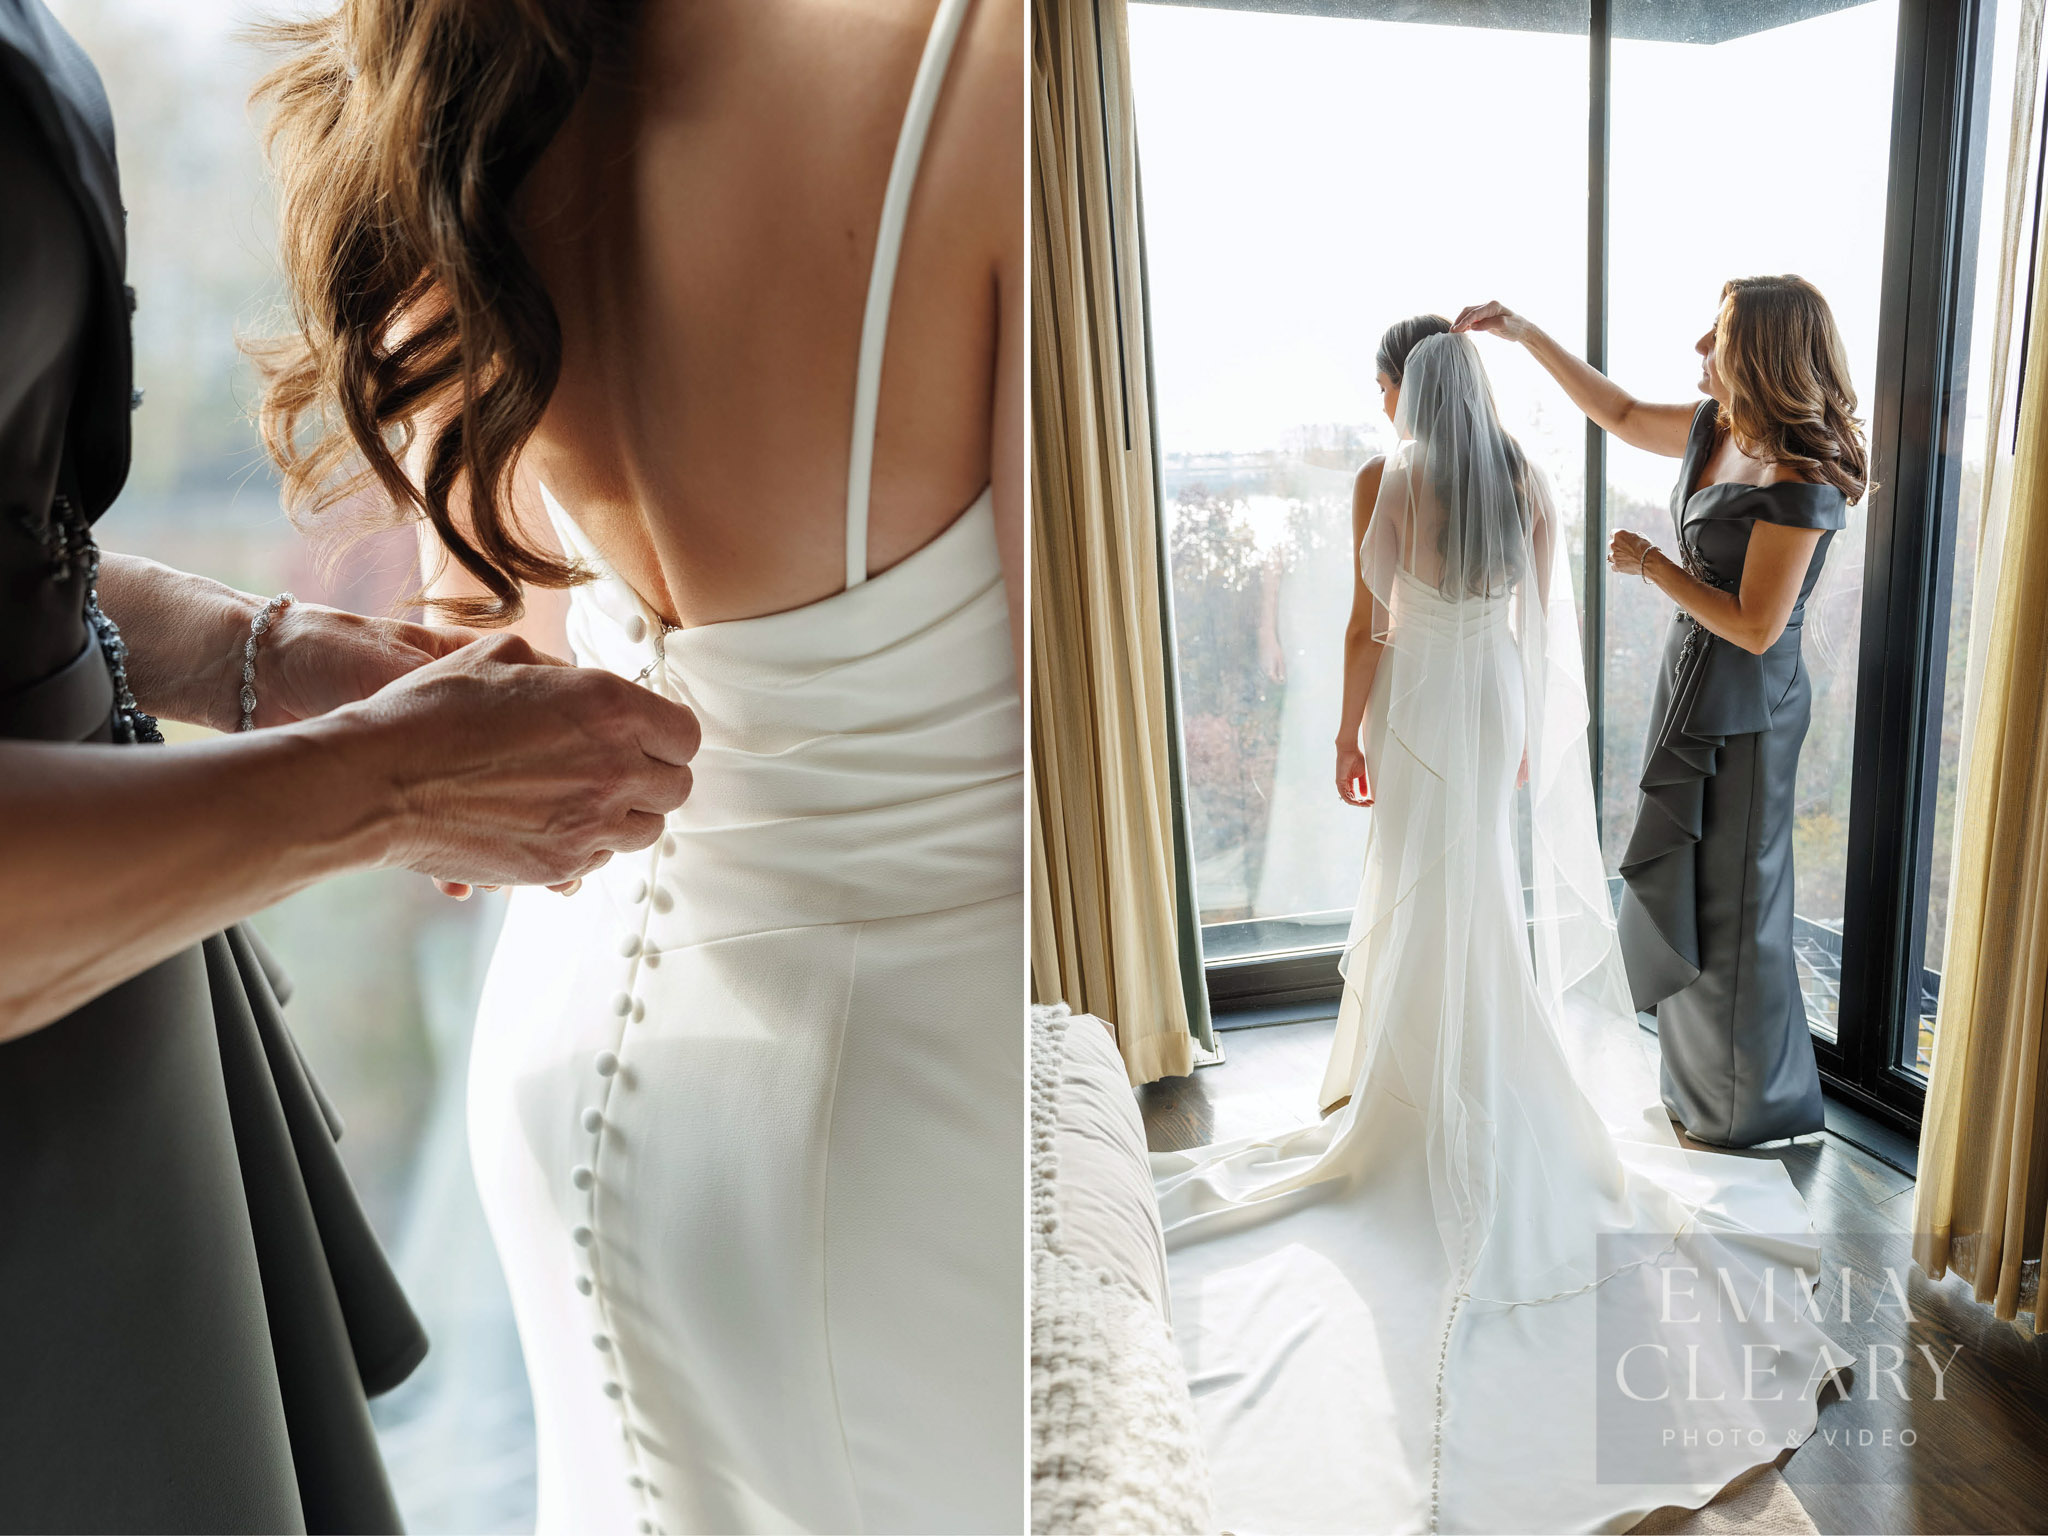 Bridal dress and veil